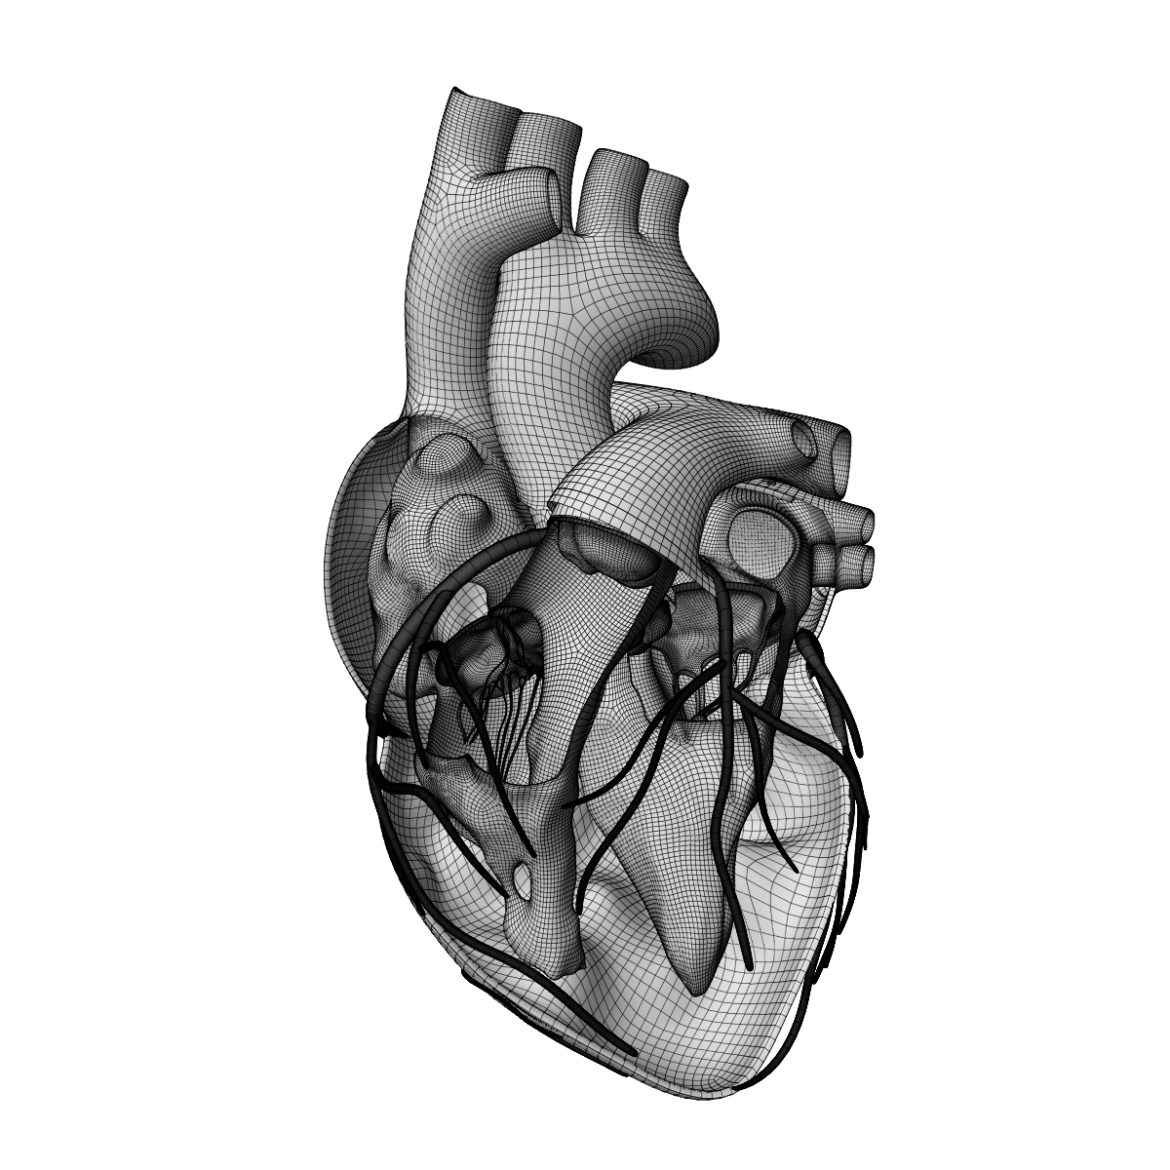  <a class="continue" href="https://www.flatpyramid.com/3d-models/medical-3d-models/anatomy/human-heart-anatomy/">Continue Reading<span> Human Heart Anatomy</span></a>